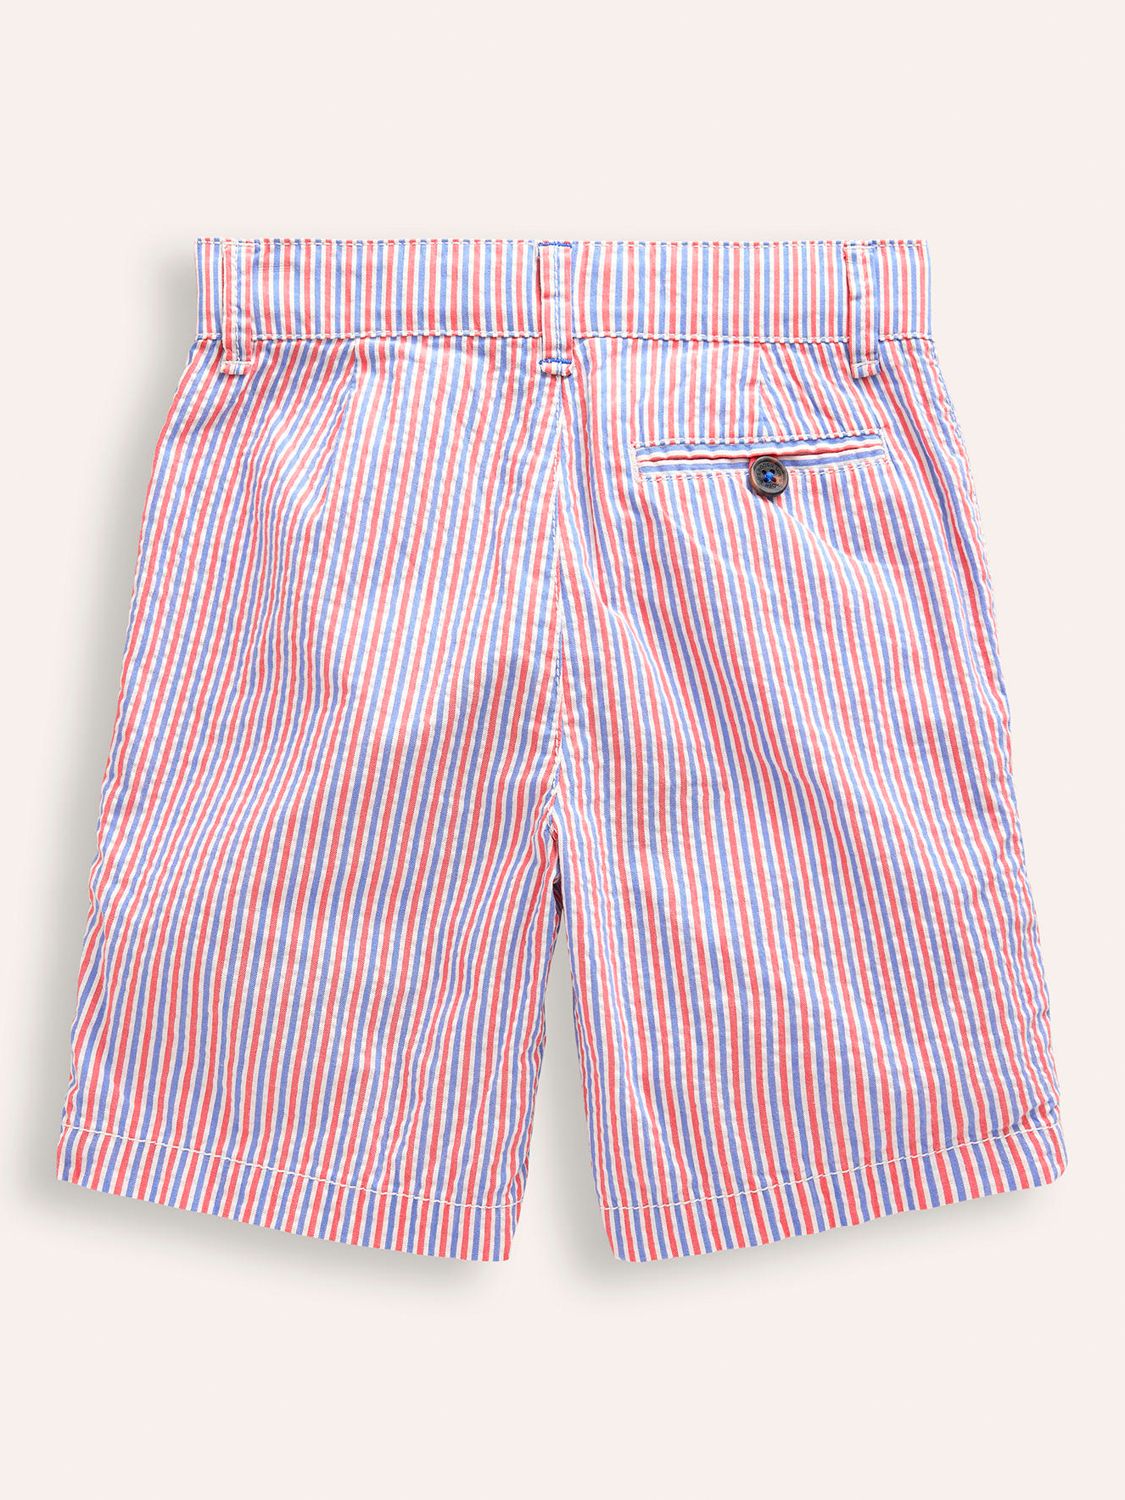 Mini Boden Kids' Seersucker Stripe Chino Shorts, Jam Red/ Blue Stripe, 3 years